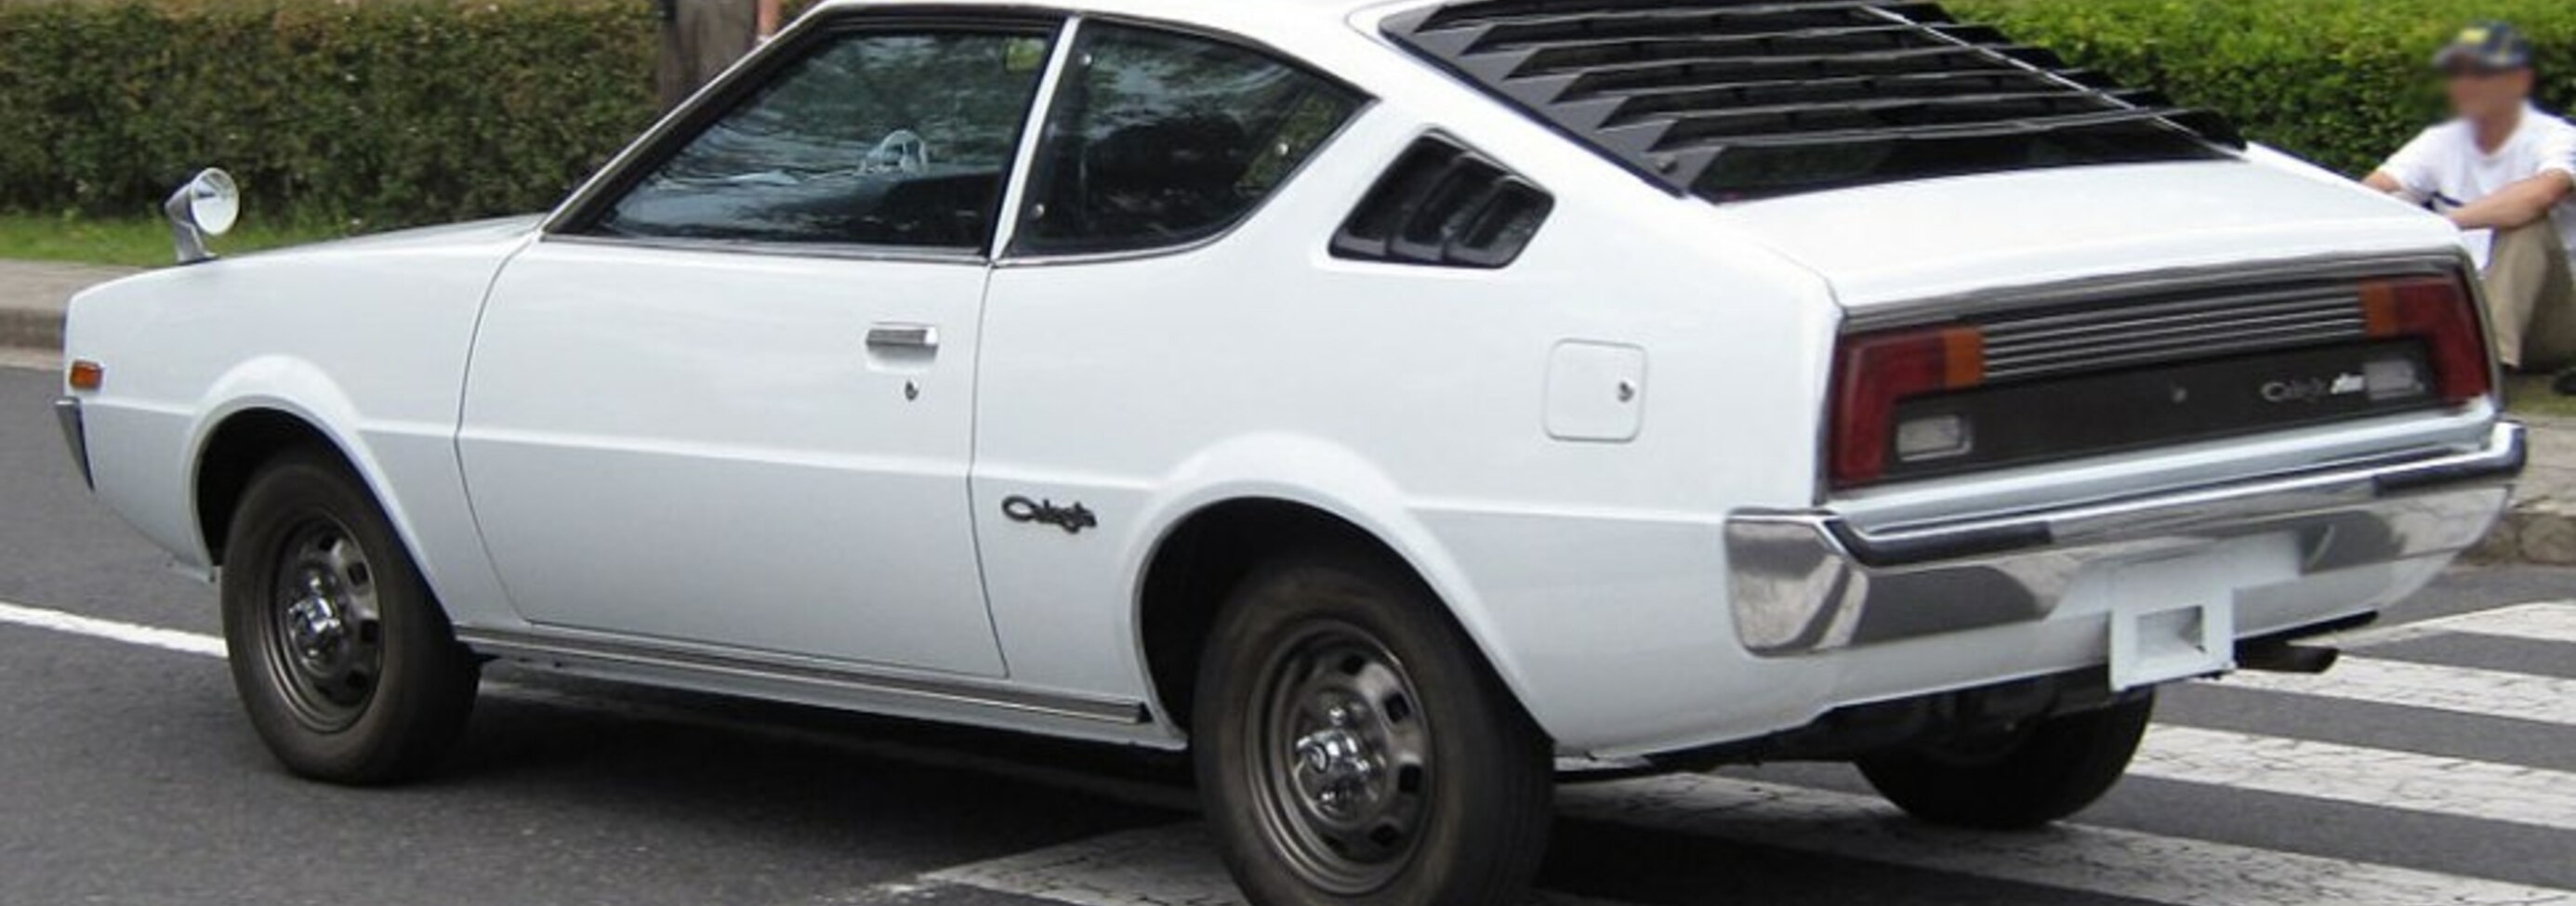 Mitsubishi Celeste (A7_) 2.0 GSR (A78) (97 Hp) 1977, 1978, 1979, 1980, 1981 